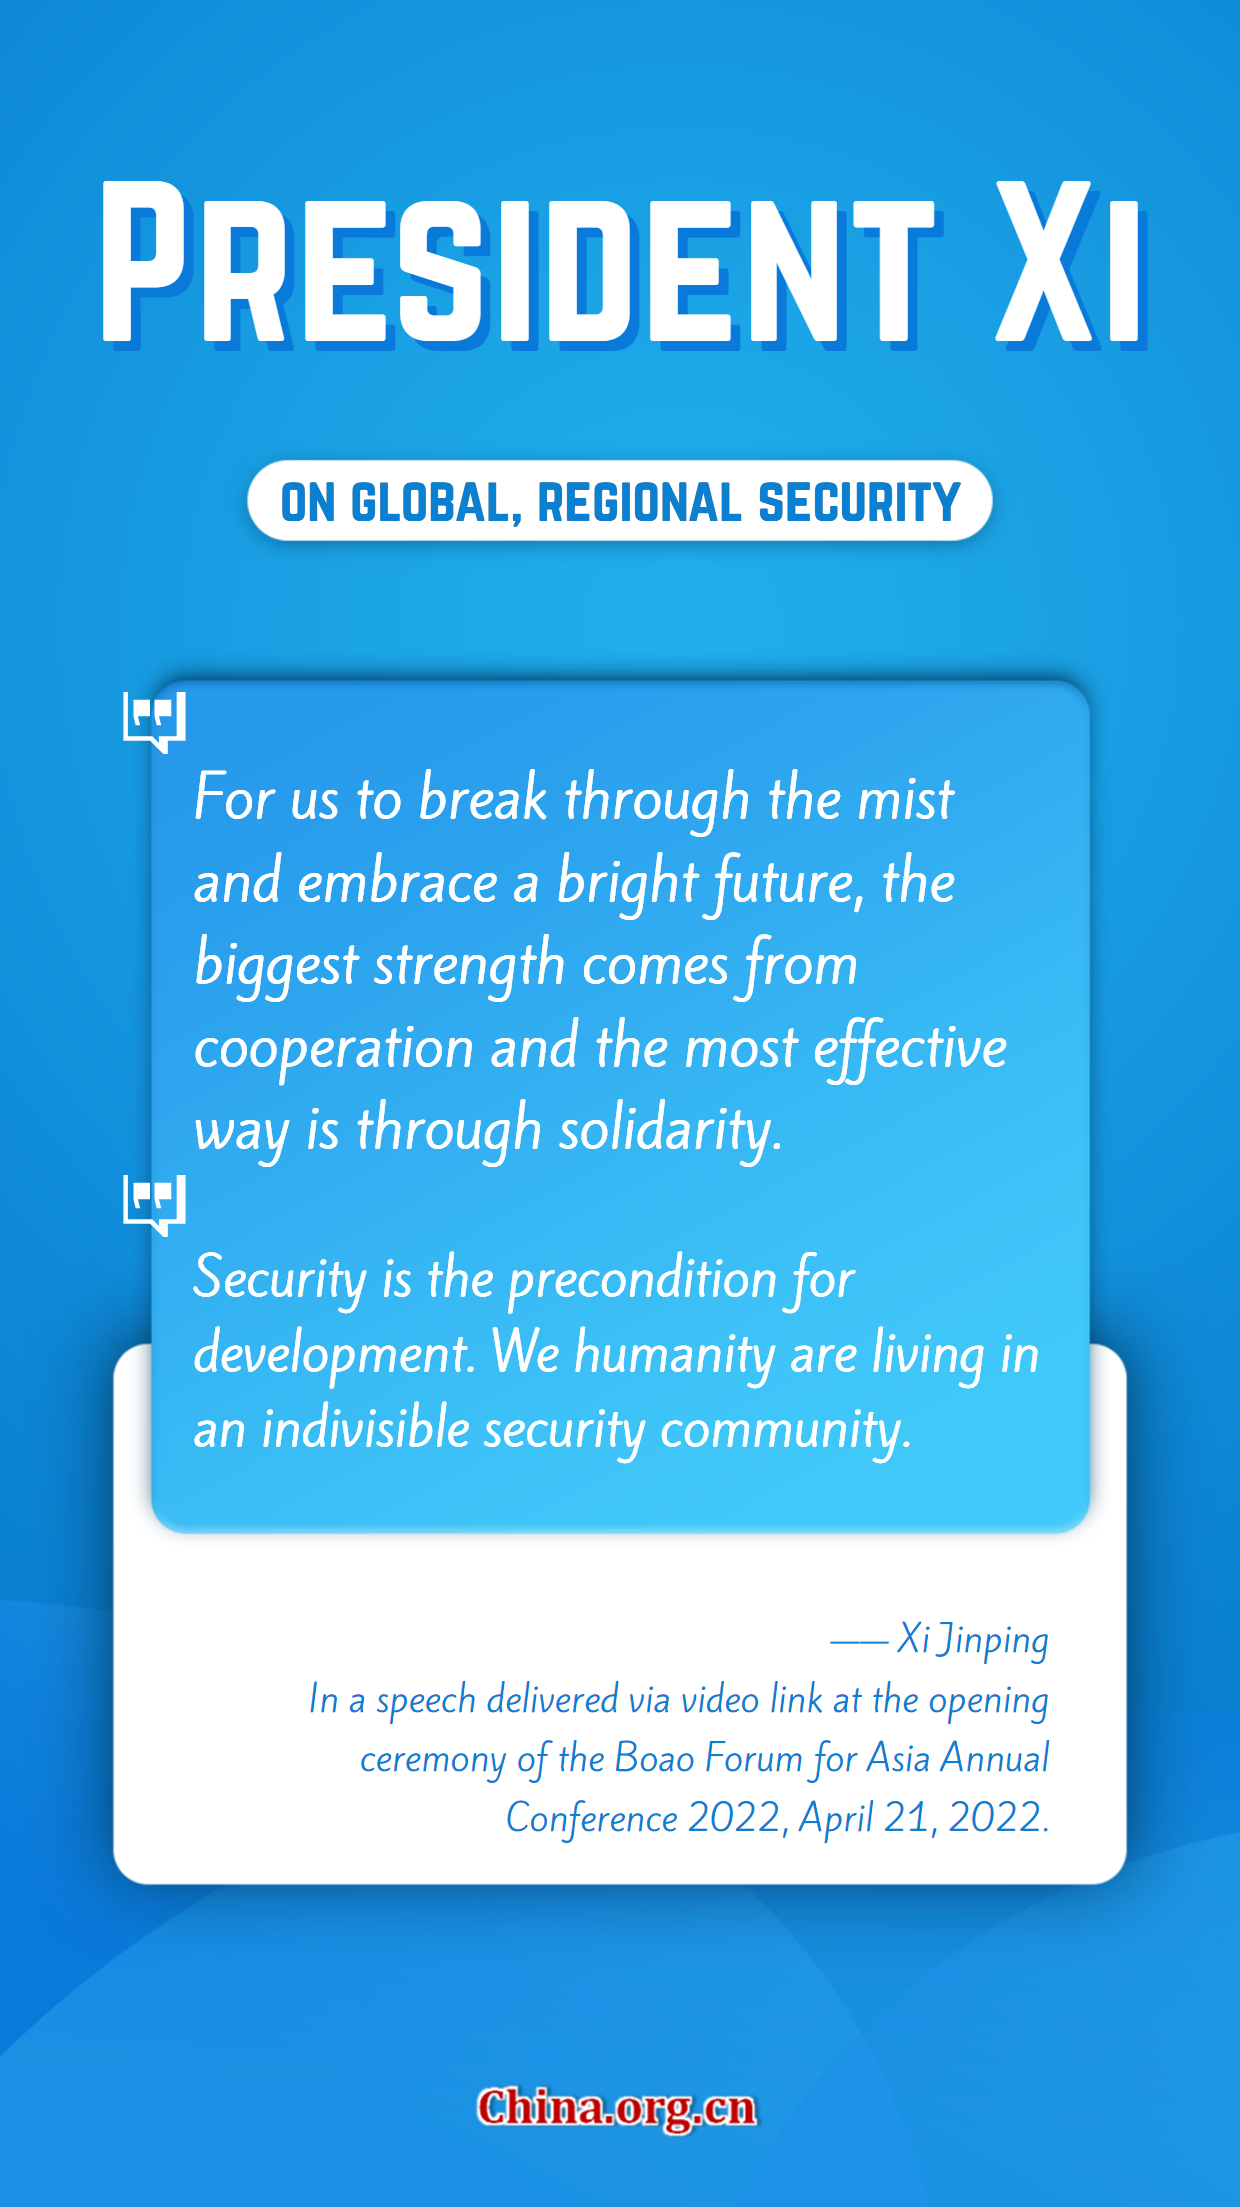 President Xi on global, regional security